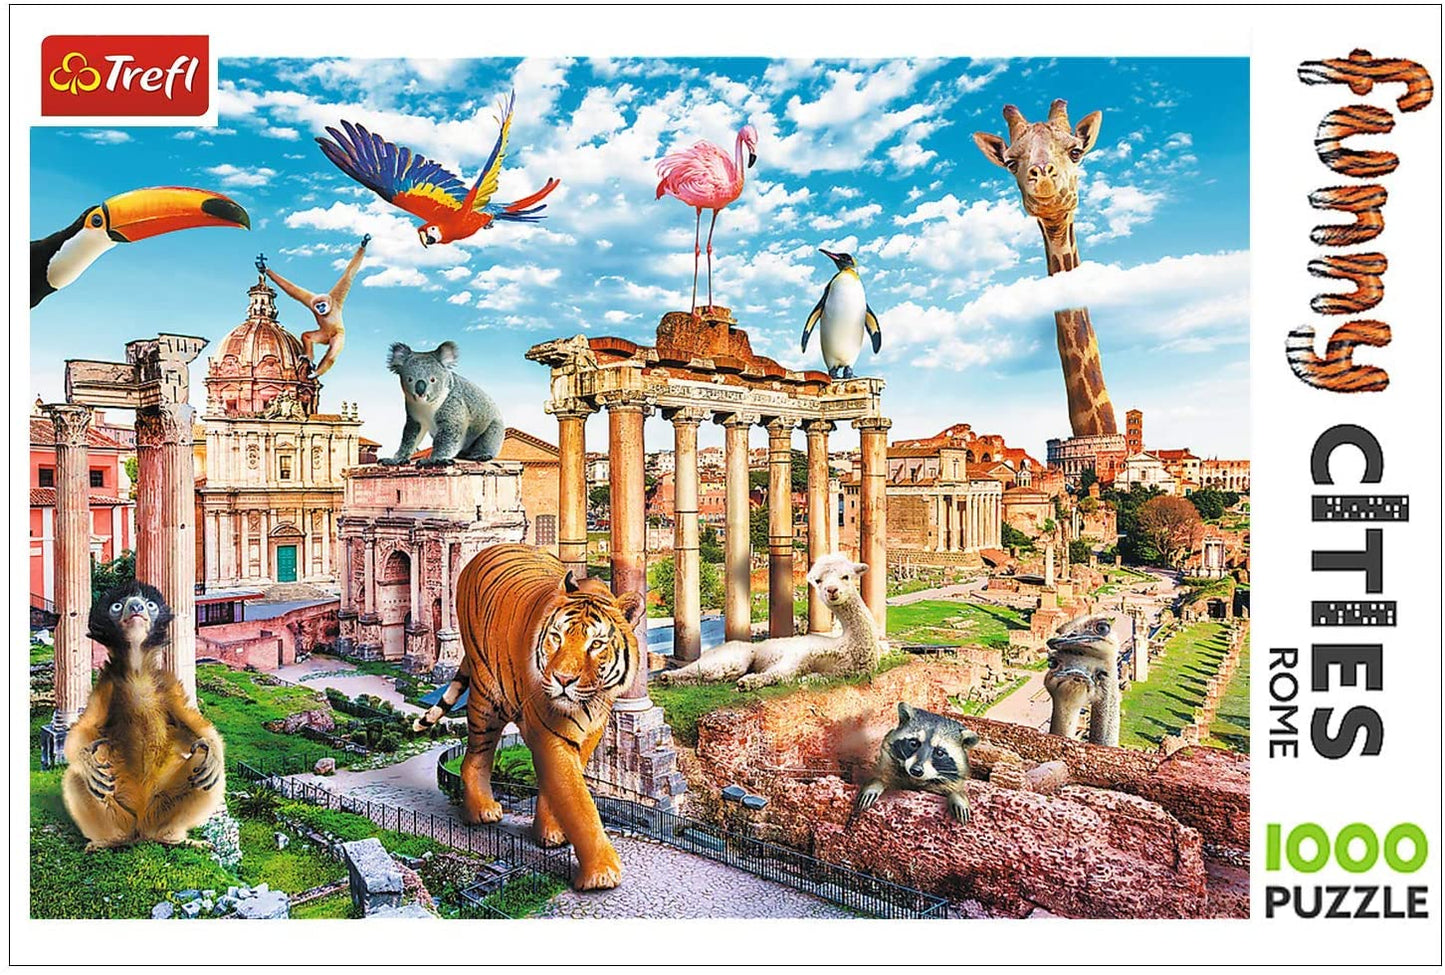 Trefl - Funny Cities - Rome - 1000 Piece Jigsaw Puzzle